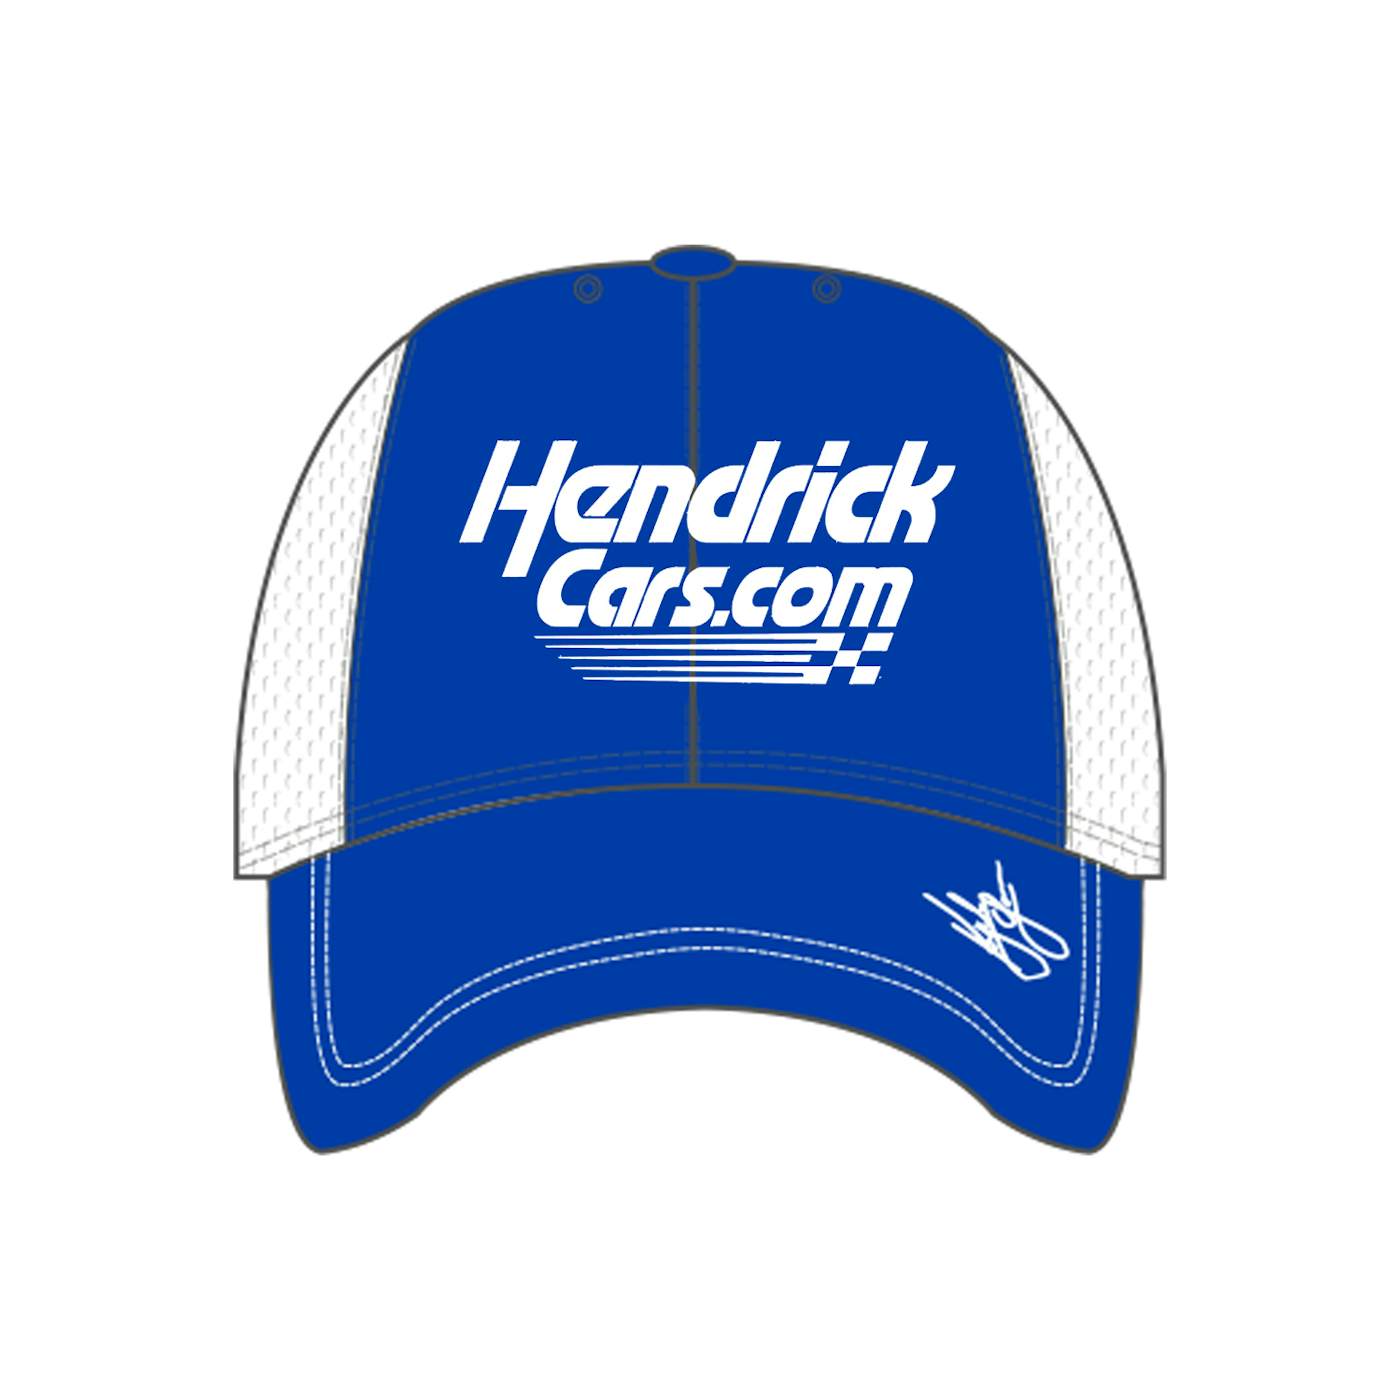 Hendrick Motorsports Kyle Larson #5 HendrickCars.com Castore Cap